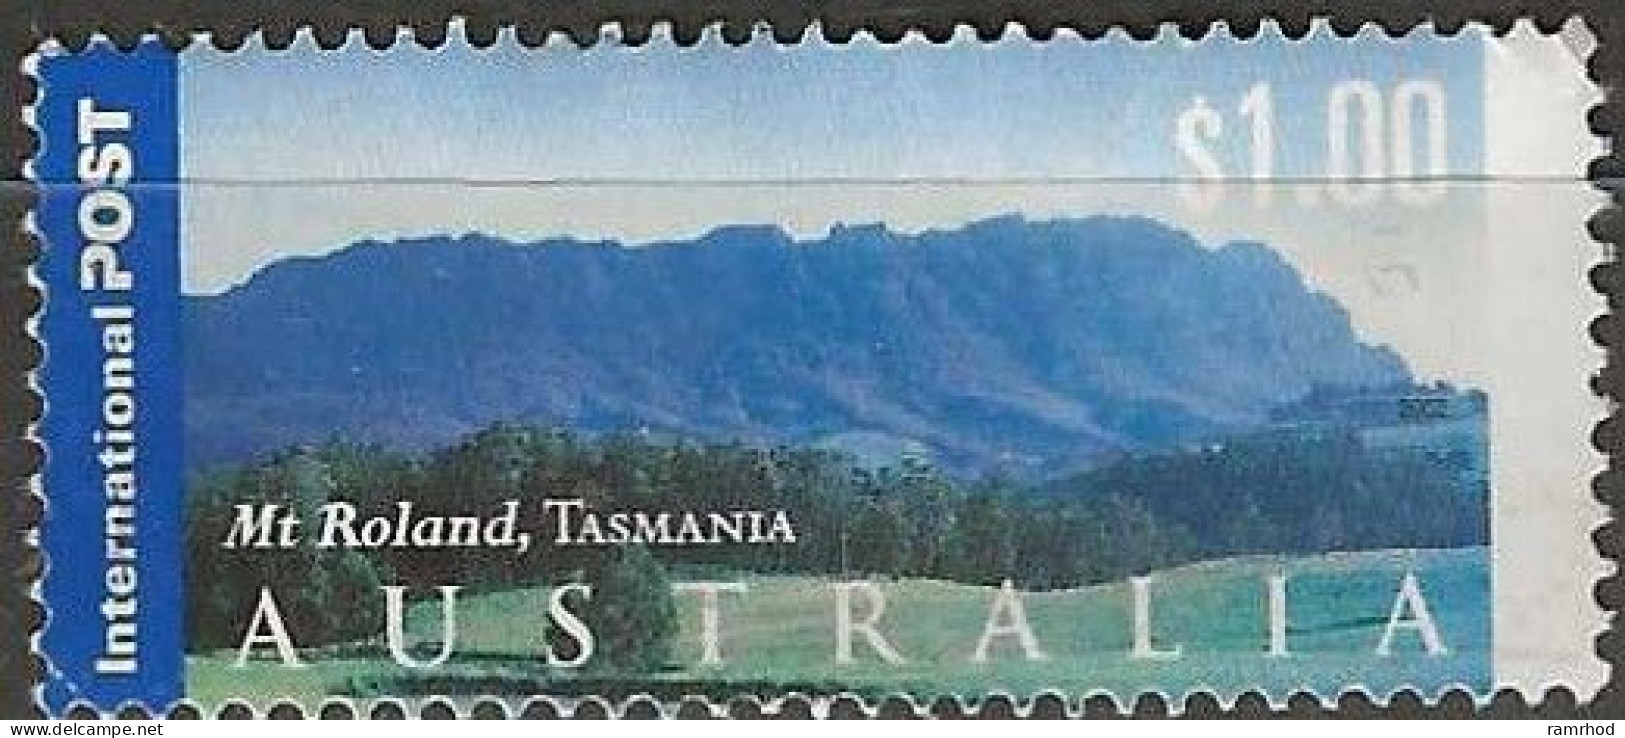 AUSTRALIA 2002 Views Of Australia - $1 - Mt. Roland, Tasmania MNG - Mint Stamps